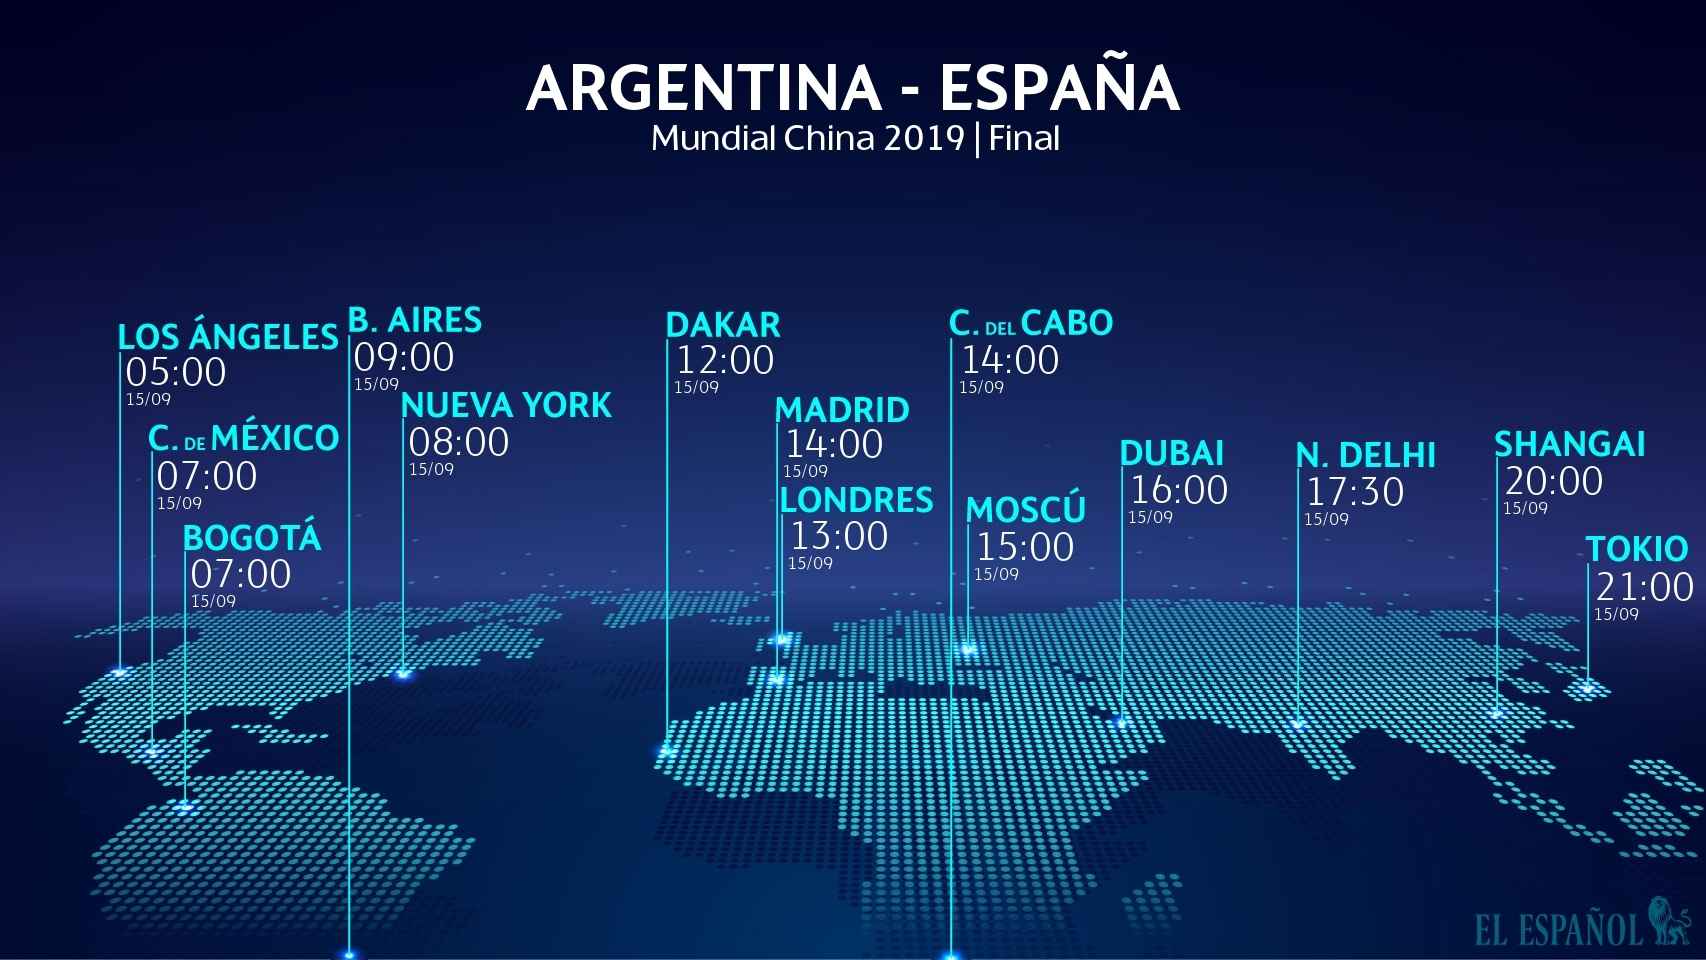 Argentina - España, final del Mundial China 2019